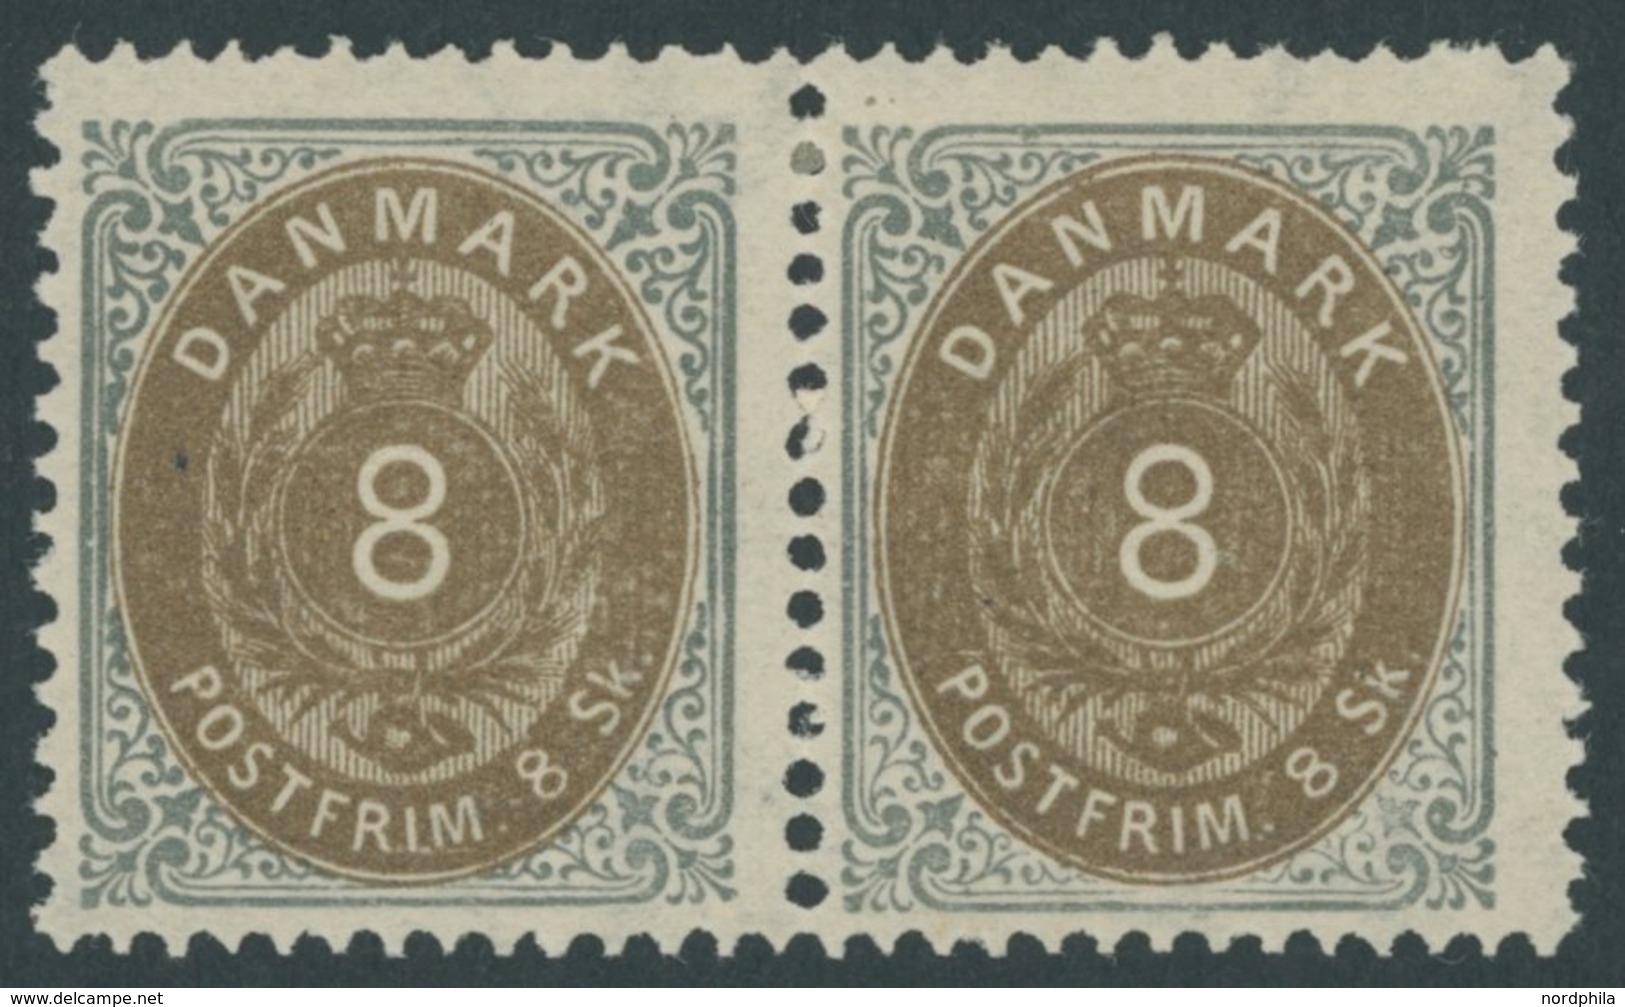 DÄNEMARK 19IA Paar *, 1871, 8 S. Grau/braun Im Waagerechten Paar, Falzrest, Kabinett - Used Stamps